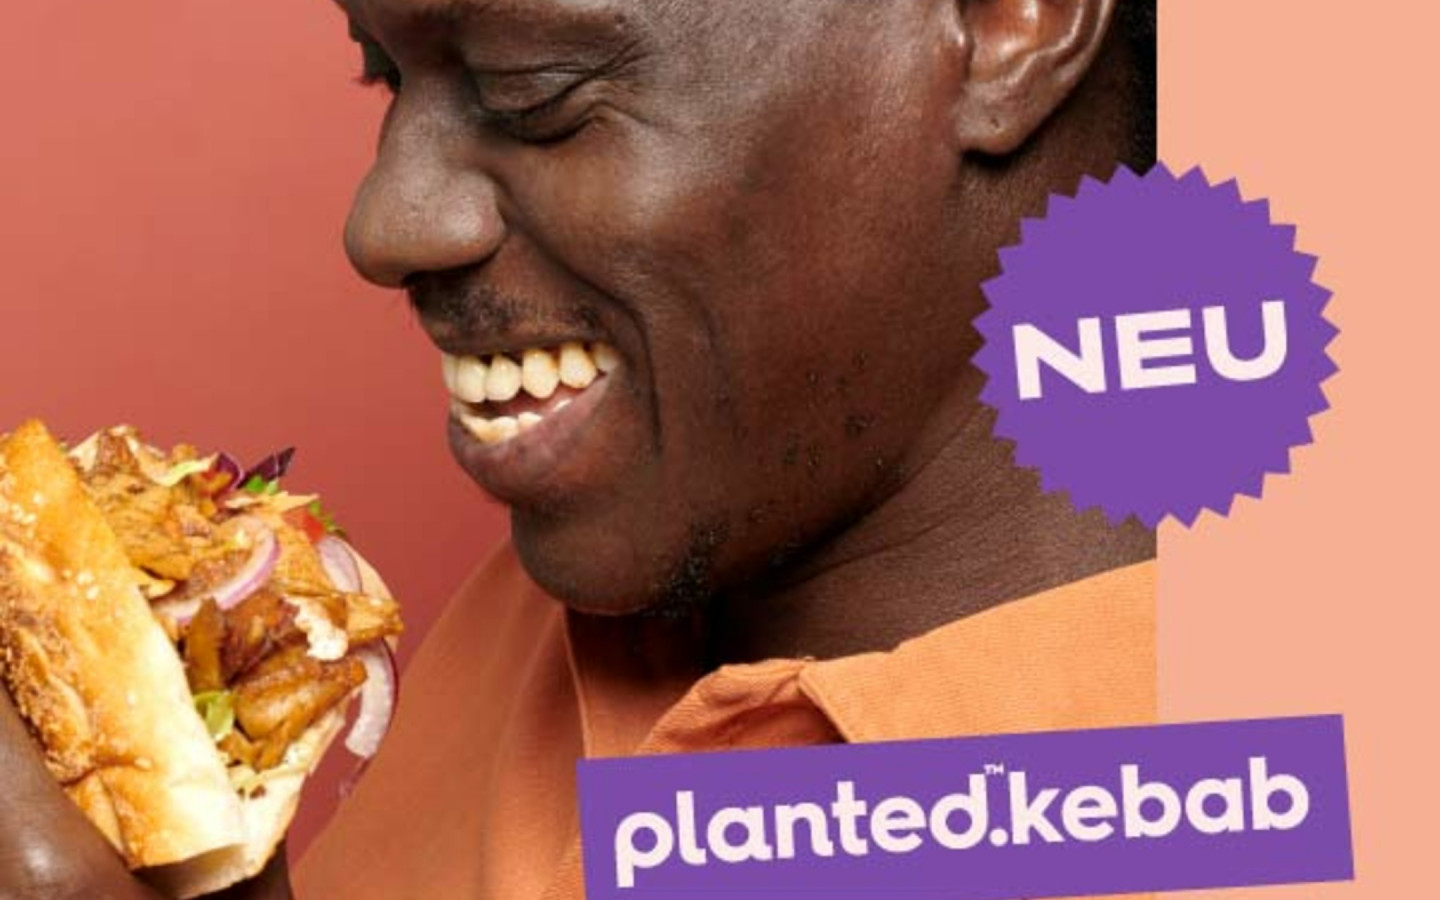 planted.kebab Original